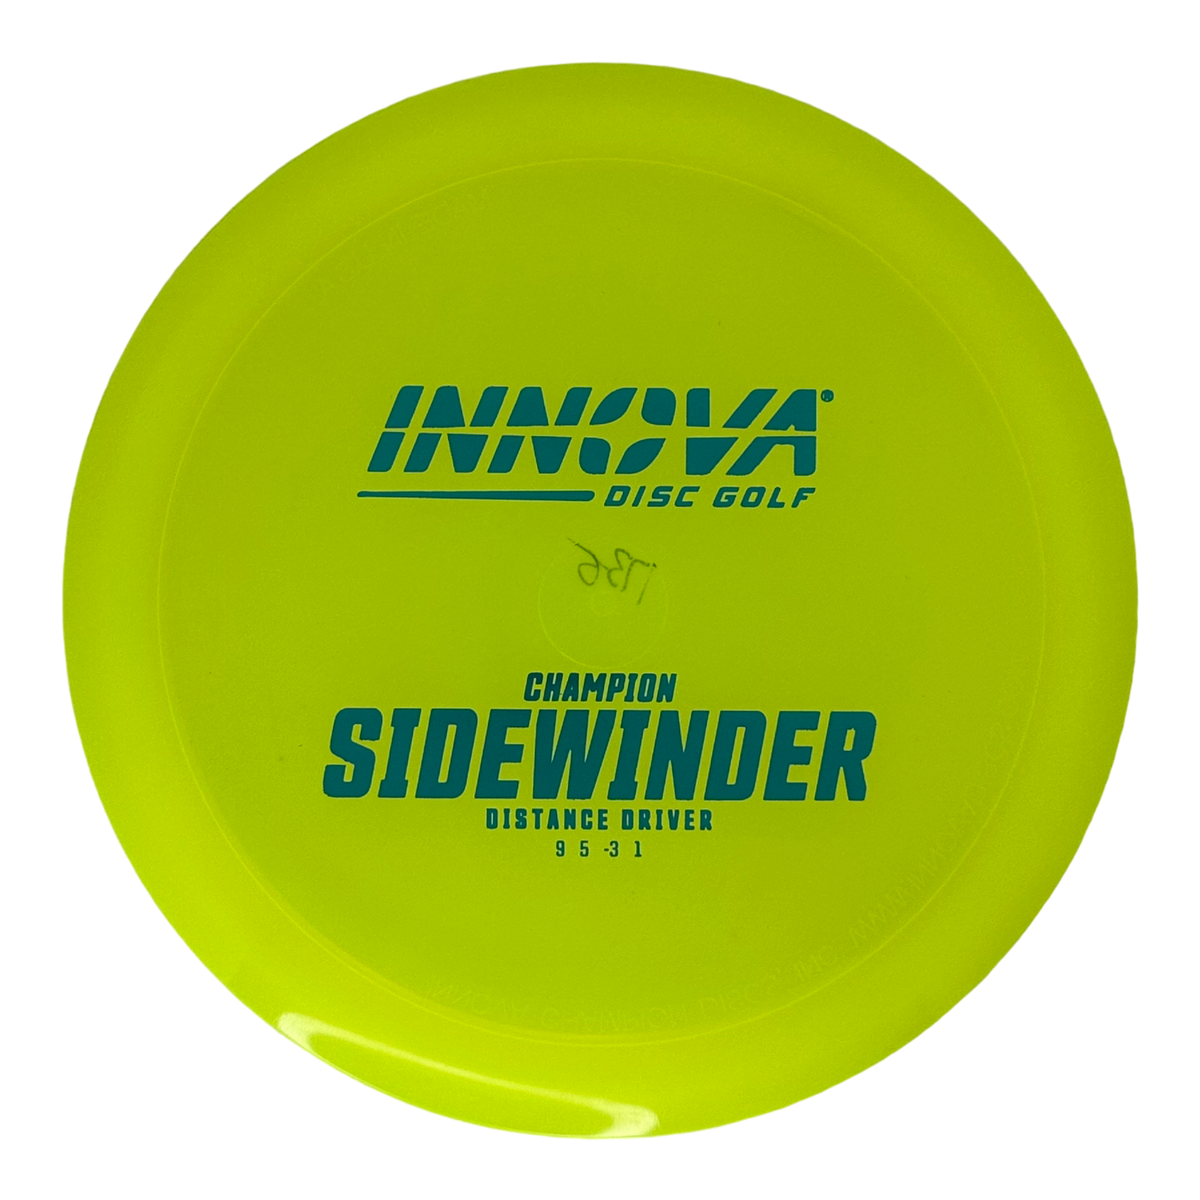 Innova Champion Sidewinder